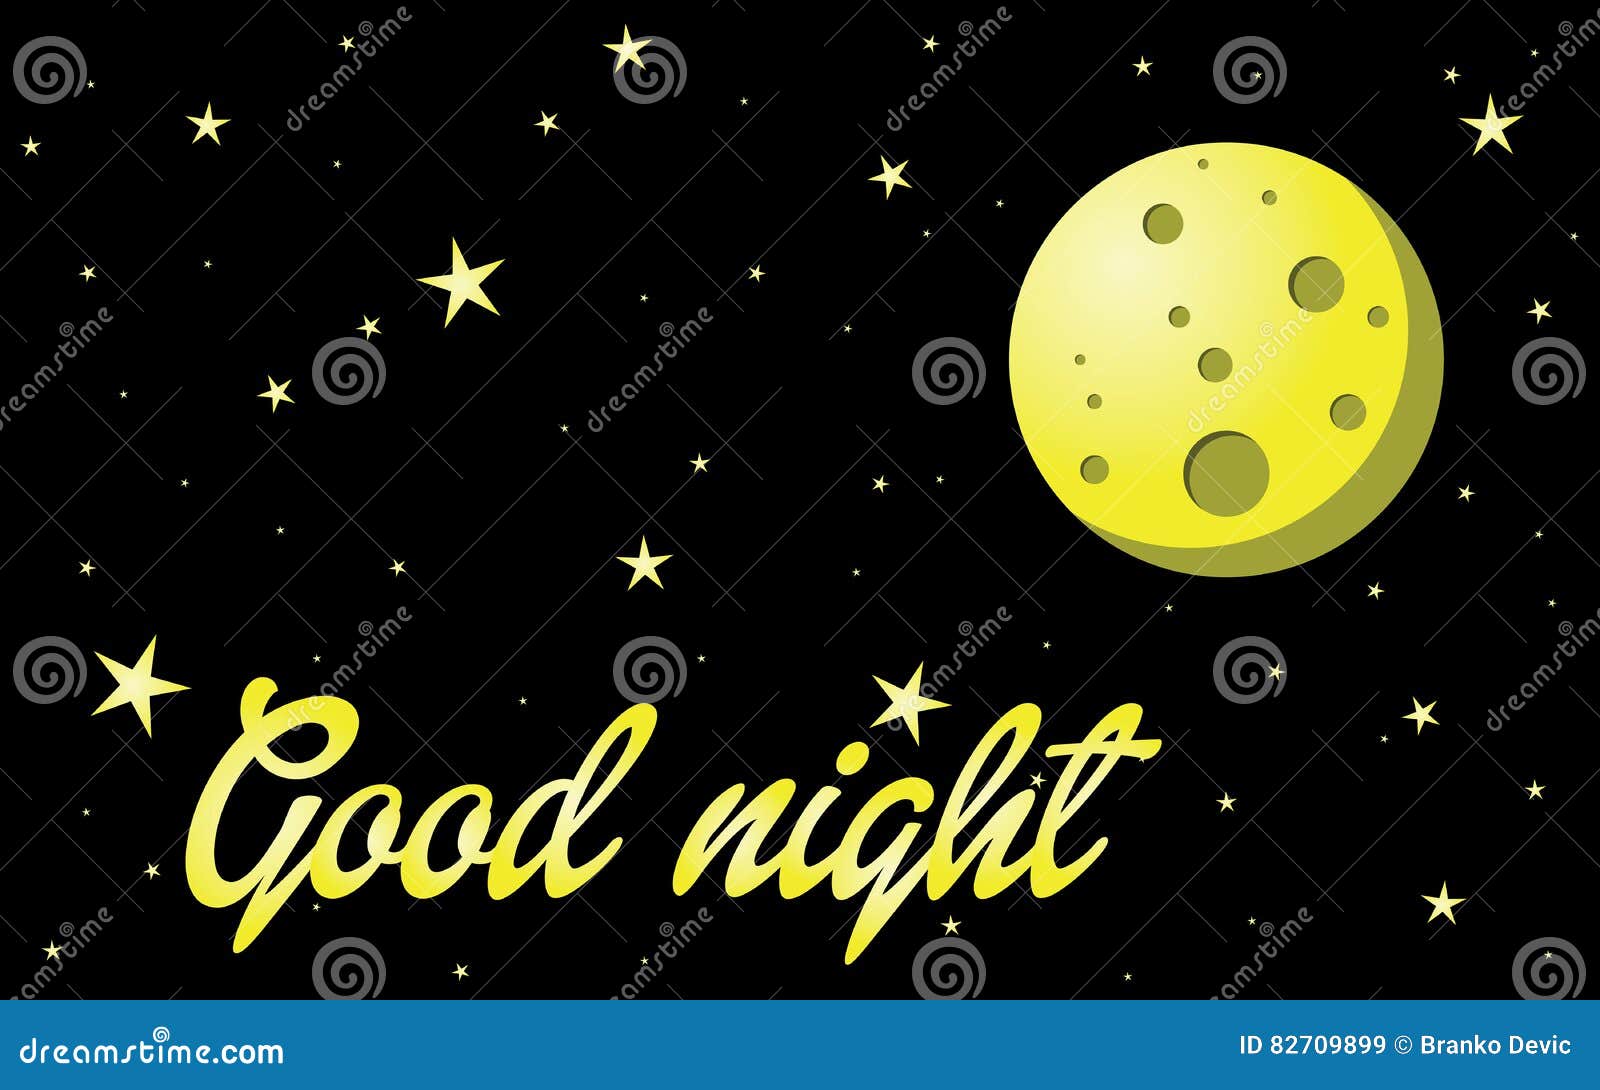 Good night stock vector. Illustration of background, starry - 82709899